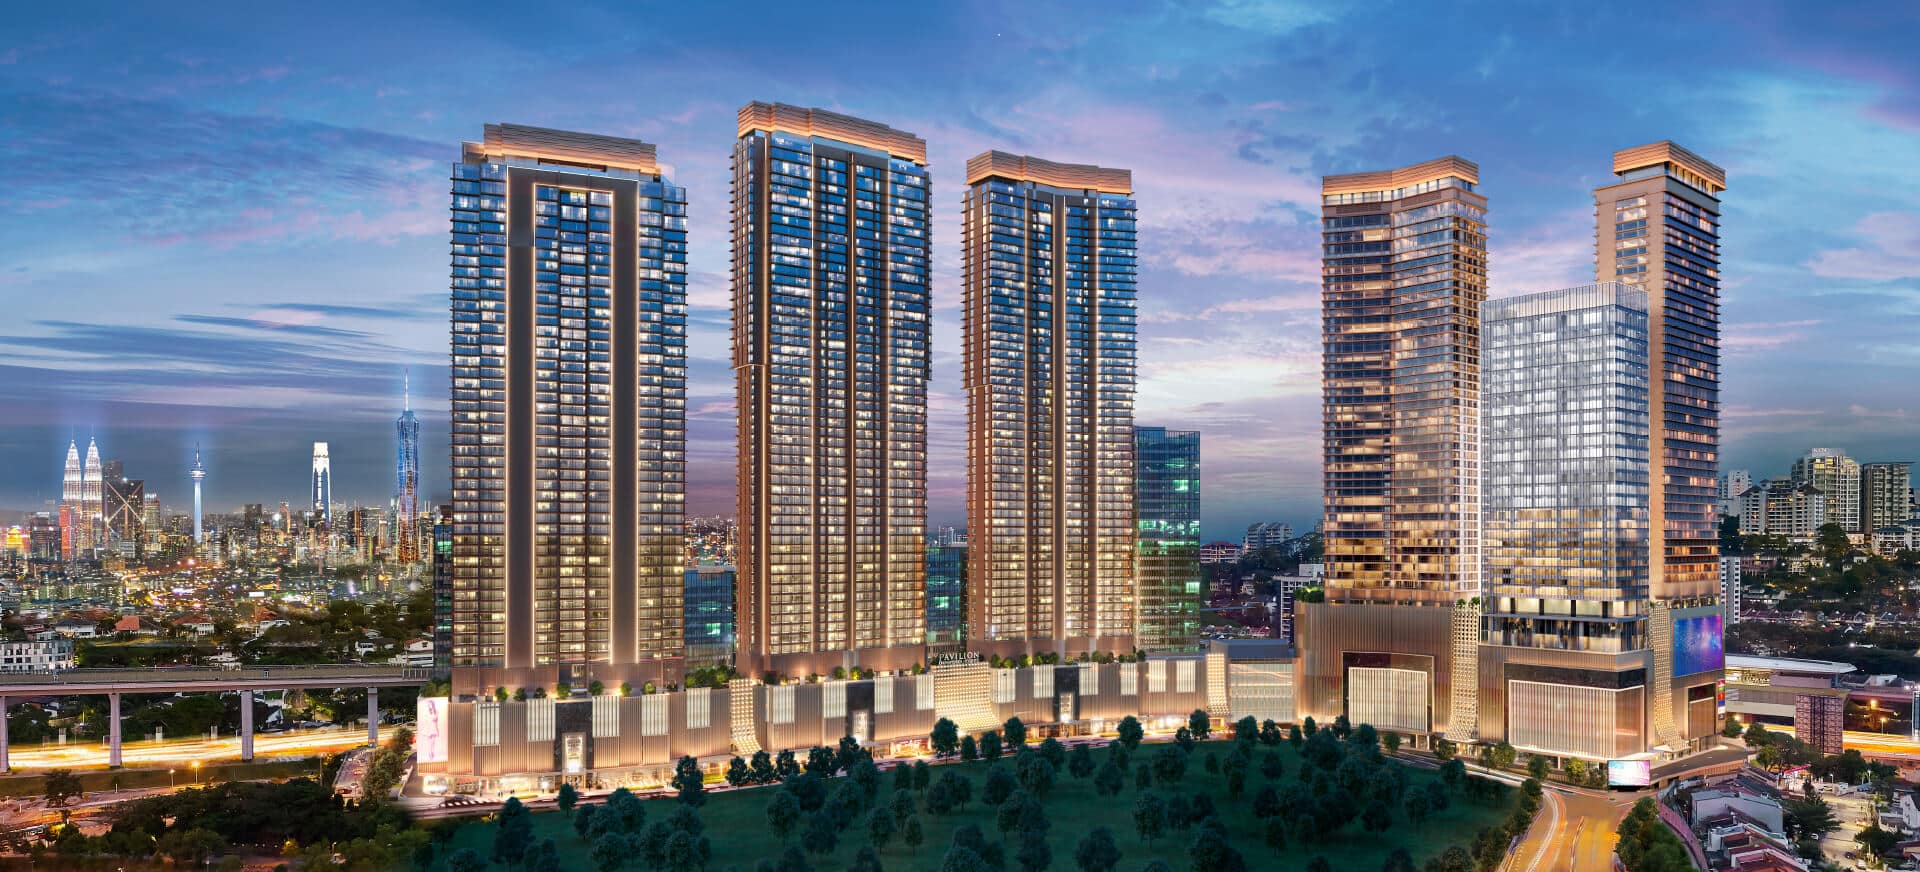 Pavilion Damansara Heights Real Estate Malaysia